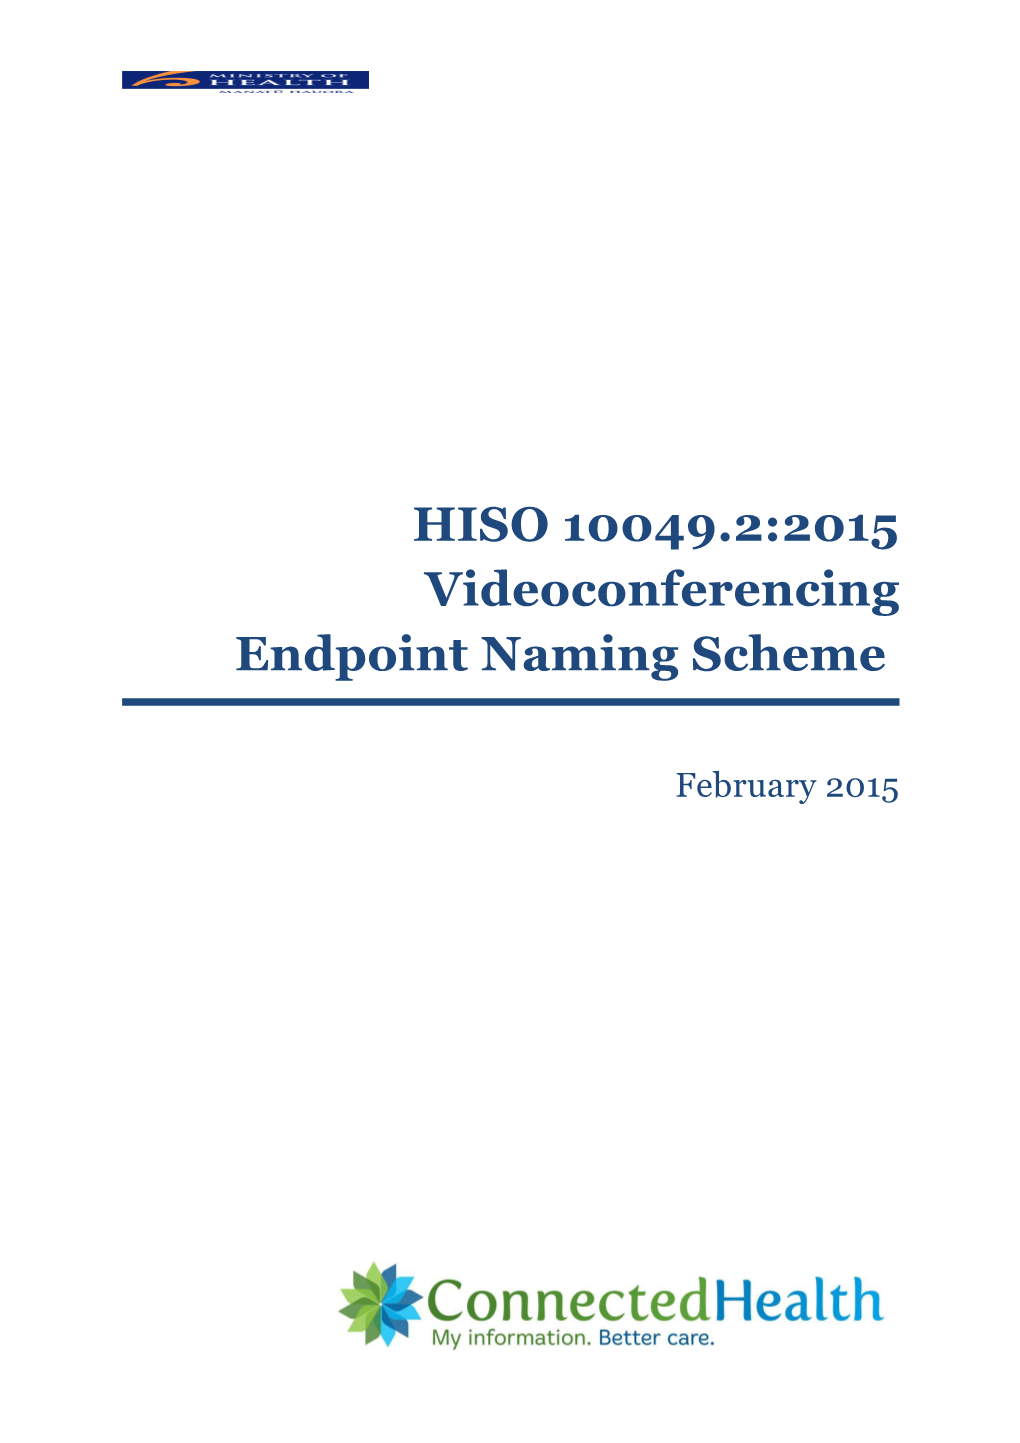 HISO 10049.2:2015 Videoconferencing Endpoint Naming Scheme